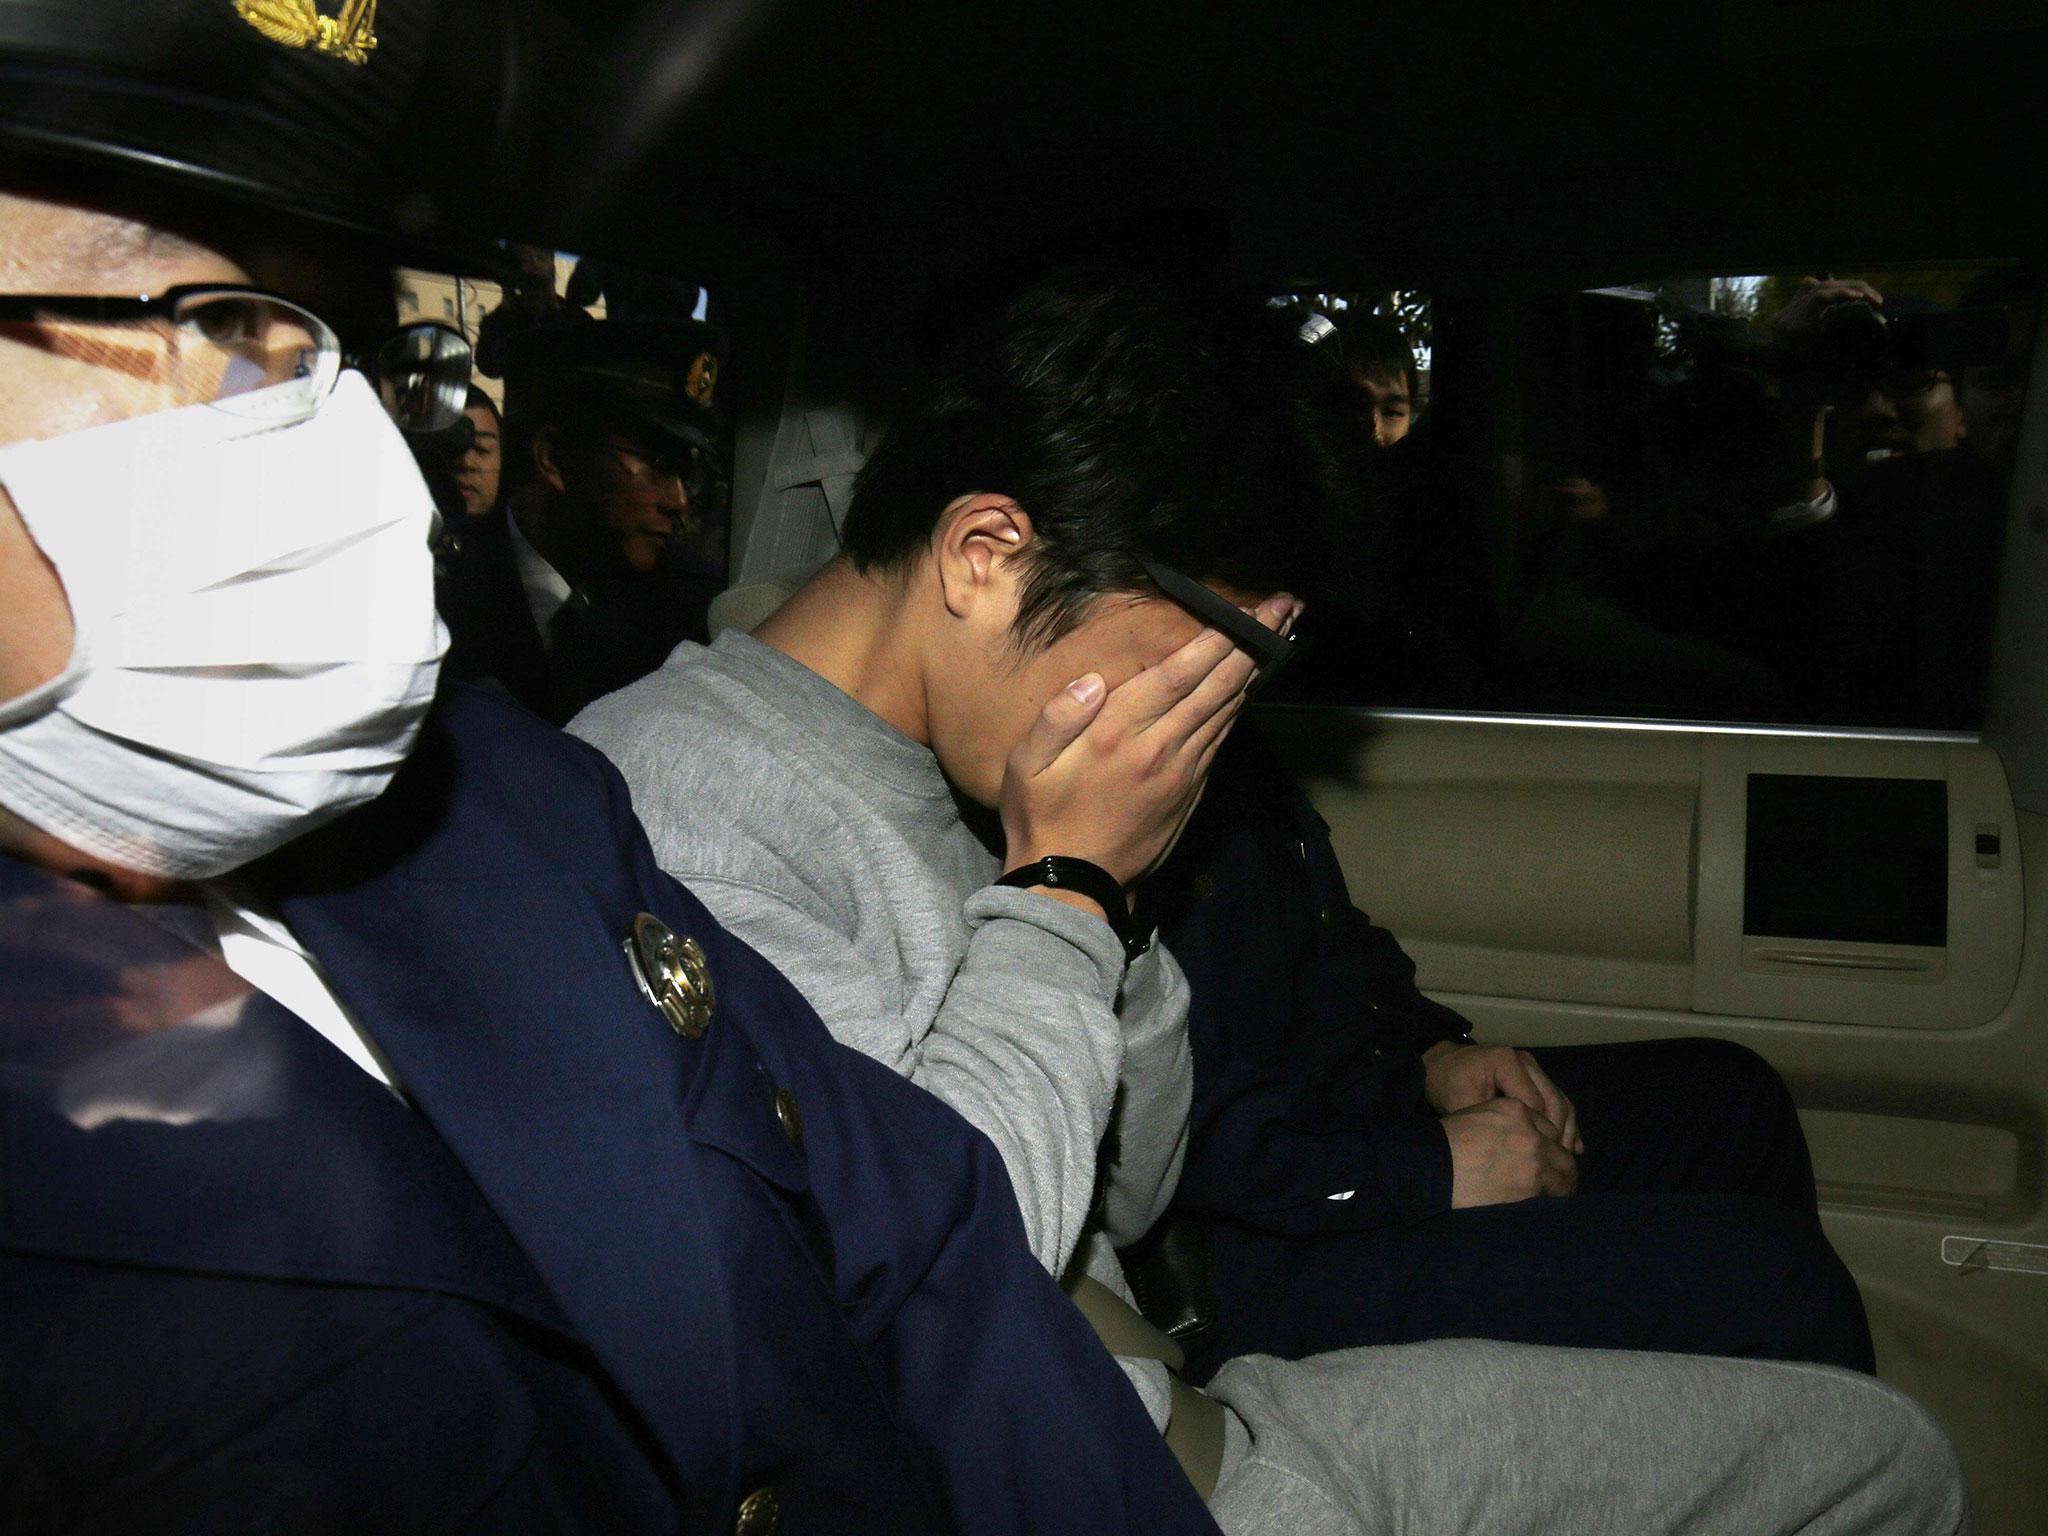 Takahiro Shiraishi, 27, confessed to killing and dismembering nine people